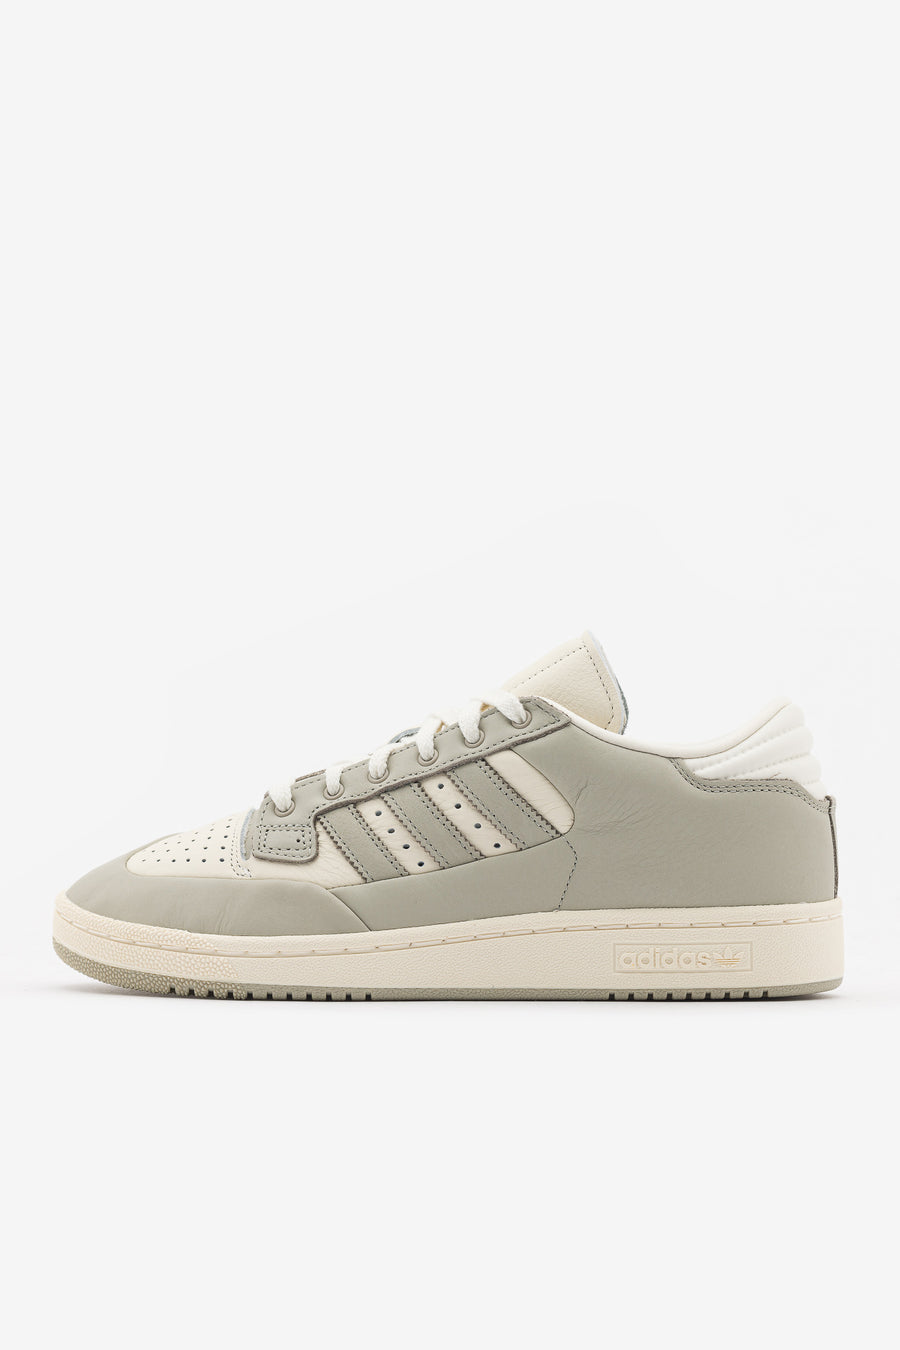 adidas - Men\'s Cetennial 85 Lo 001 Sneaker in Sesame/Cream White/Cloud White